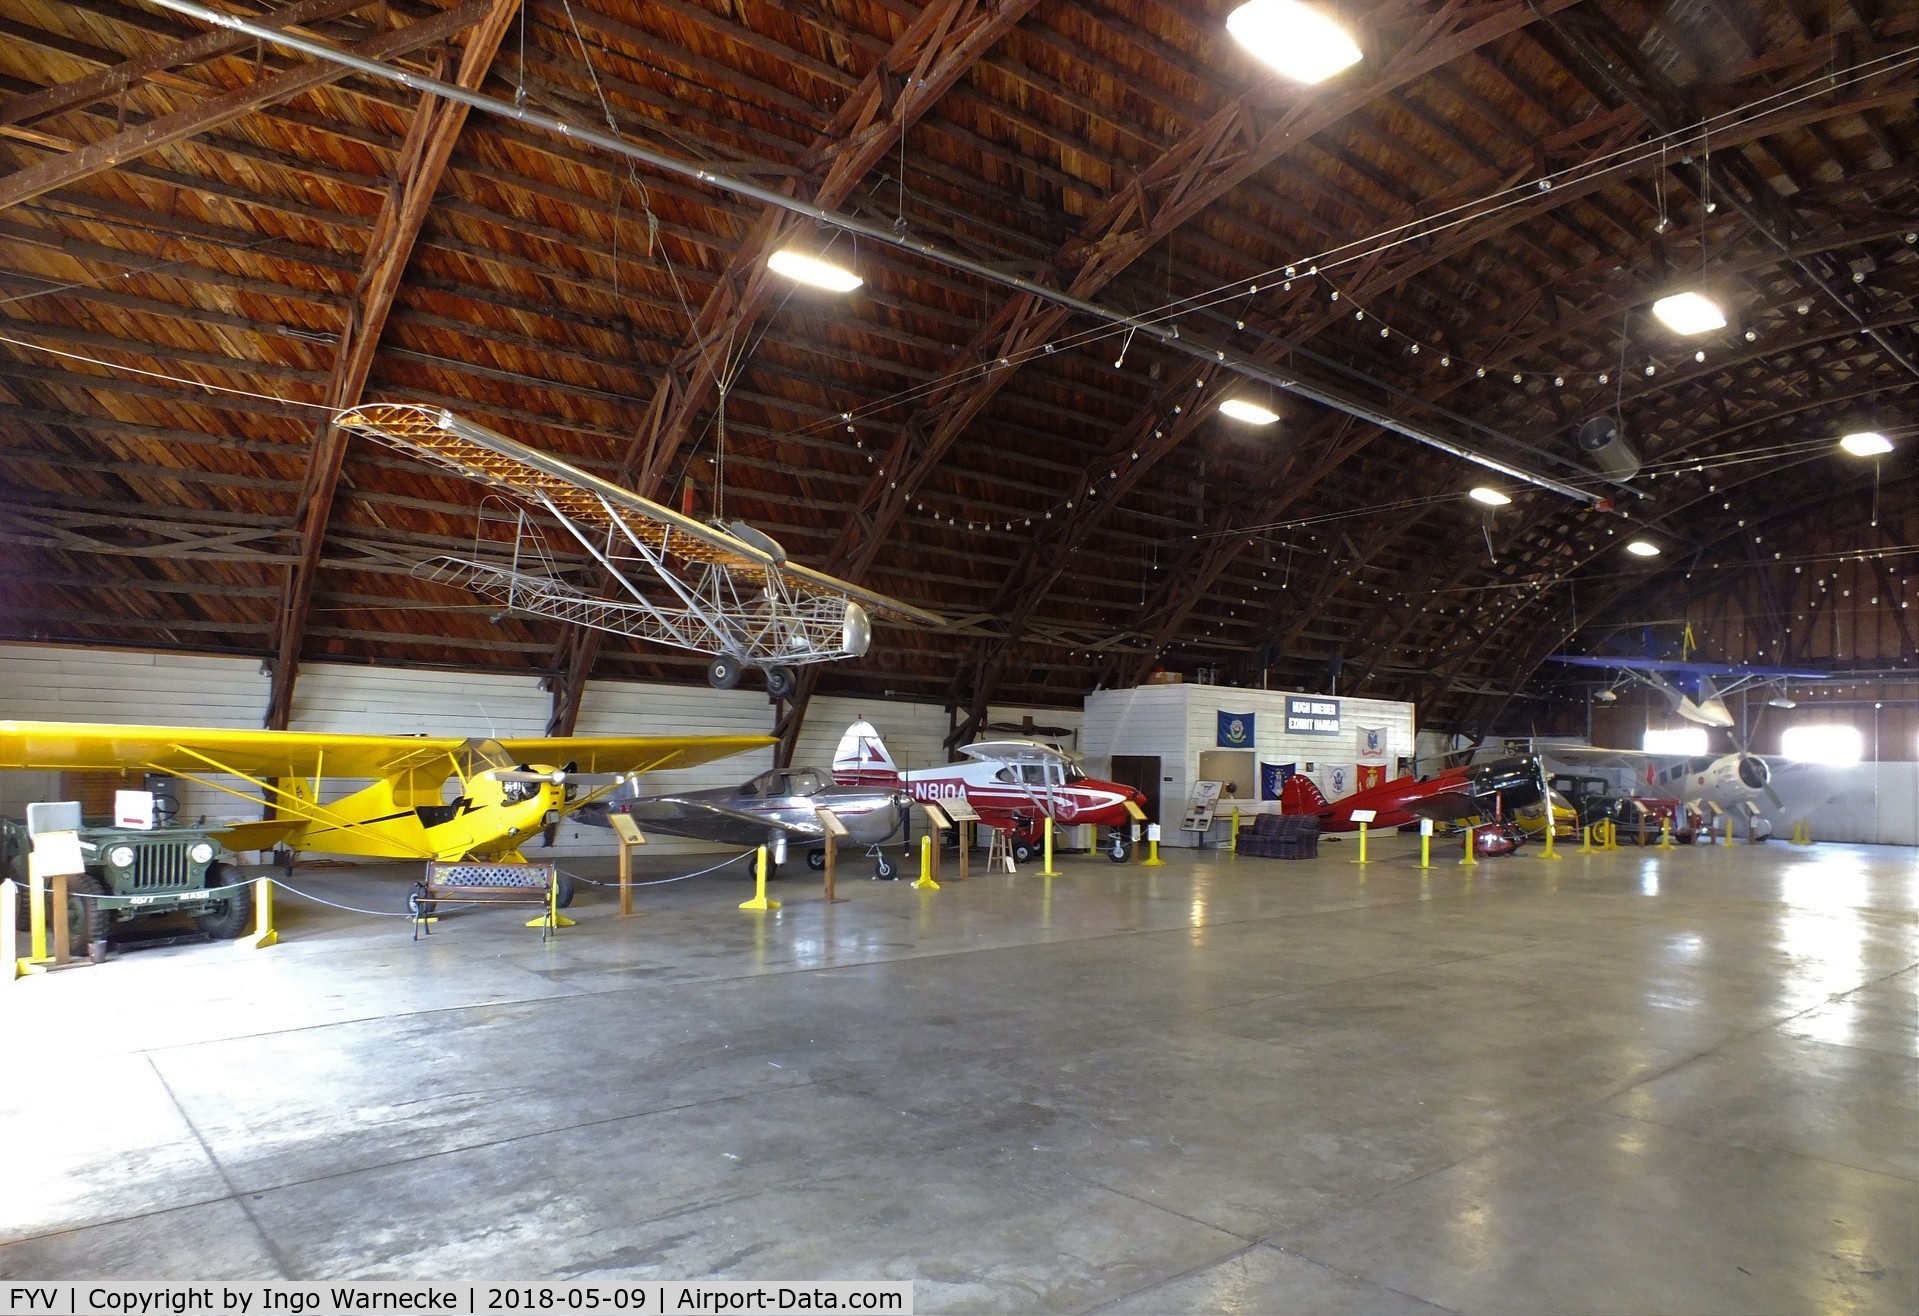 Drake Field Airport (FYV) - inside the historic 1940s hangar of the Arkansas Air & Military Museum at Fayetteville Municpal Airport / Drake Field, Fayetteville AR